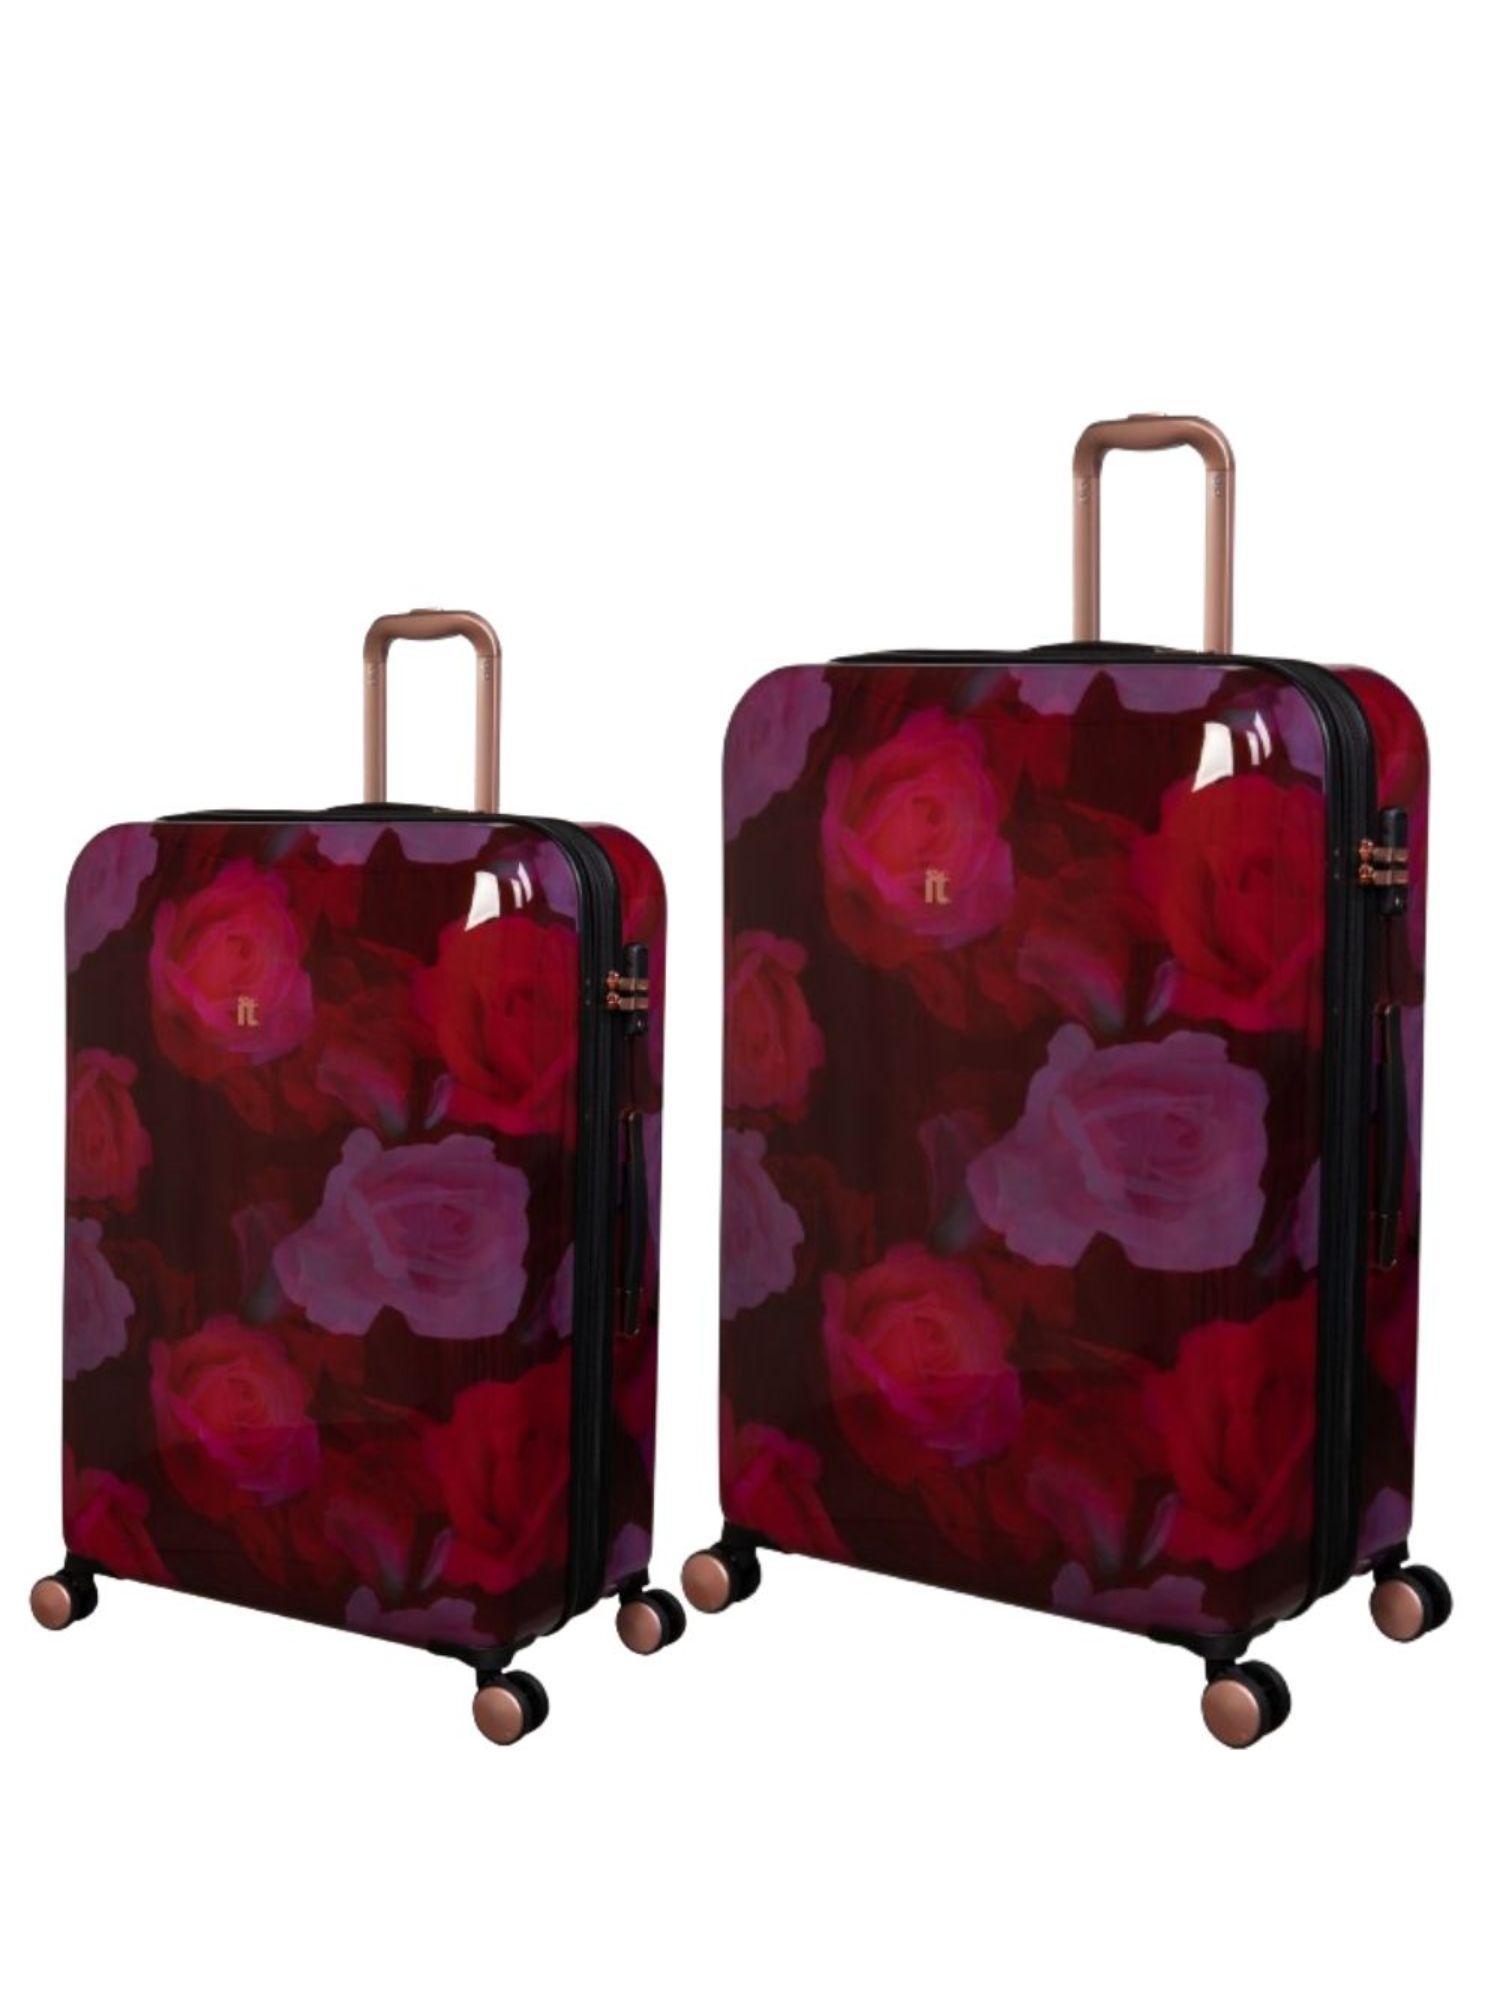 sheen maxy rose red set of 2 expandable hardsided tsa luggage trolley